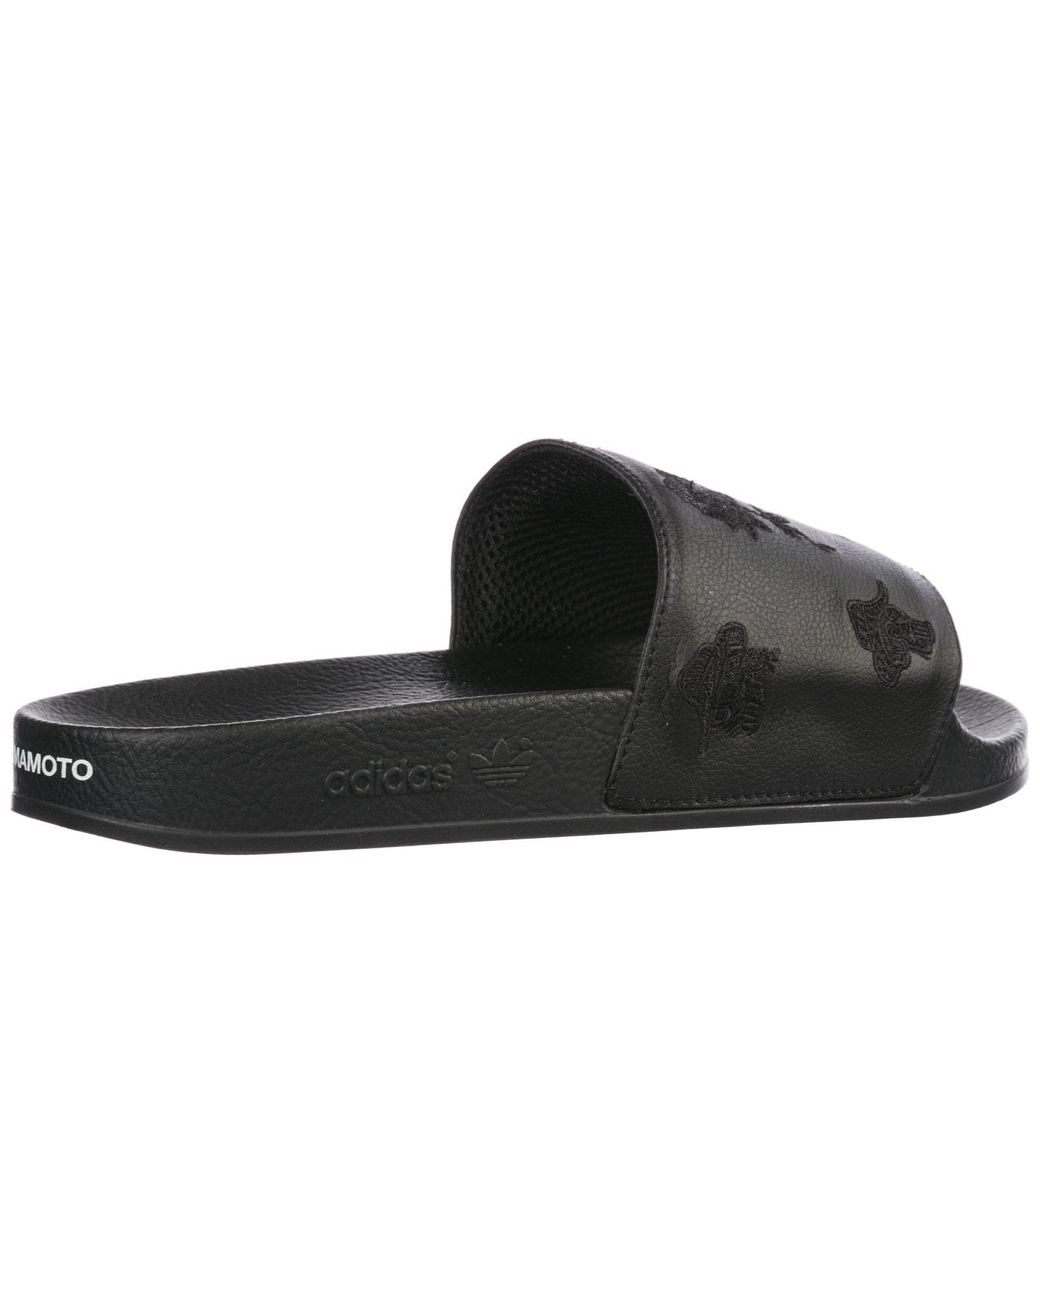 Y-3 Slippers Sandals Adilette Aop in Nero (Black) for Men - Lyst